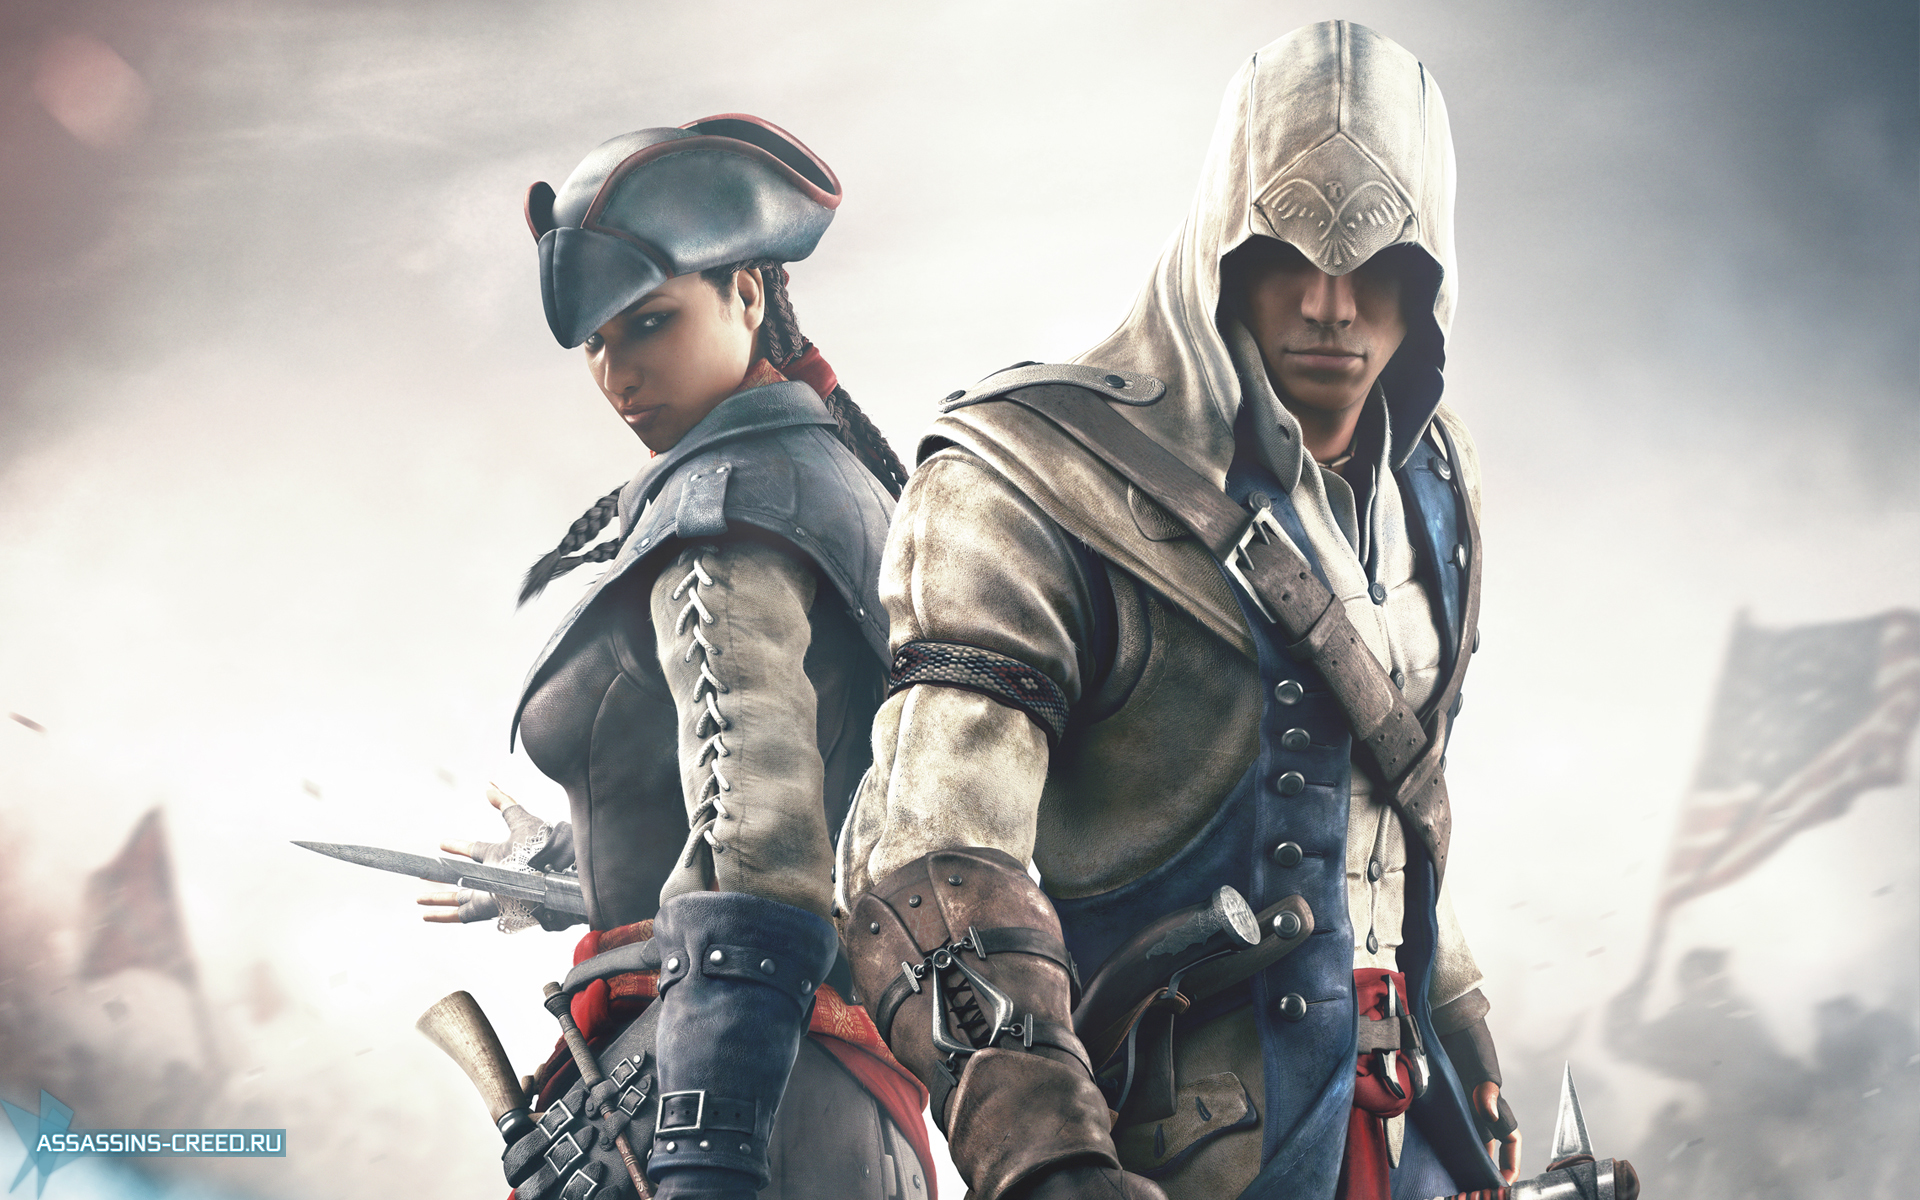 Descarga gratuita de fondo de pantalla para móvil de Juegos, Assassins Creed.